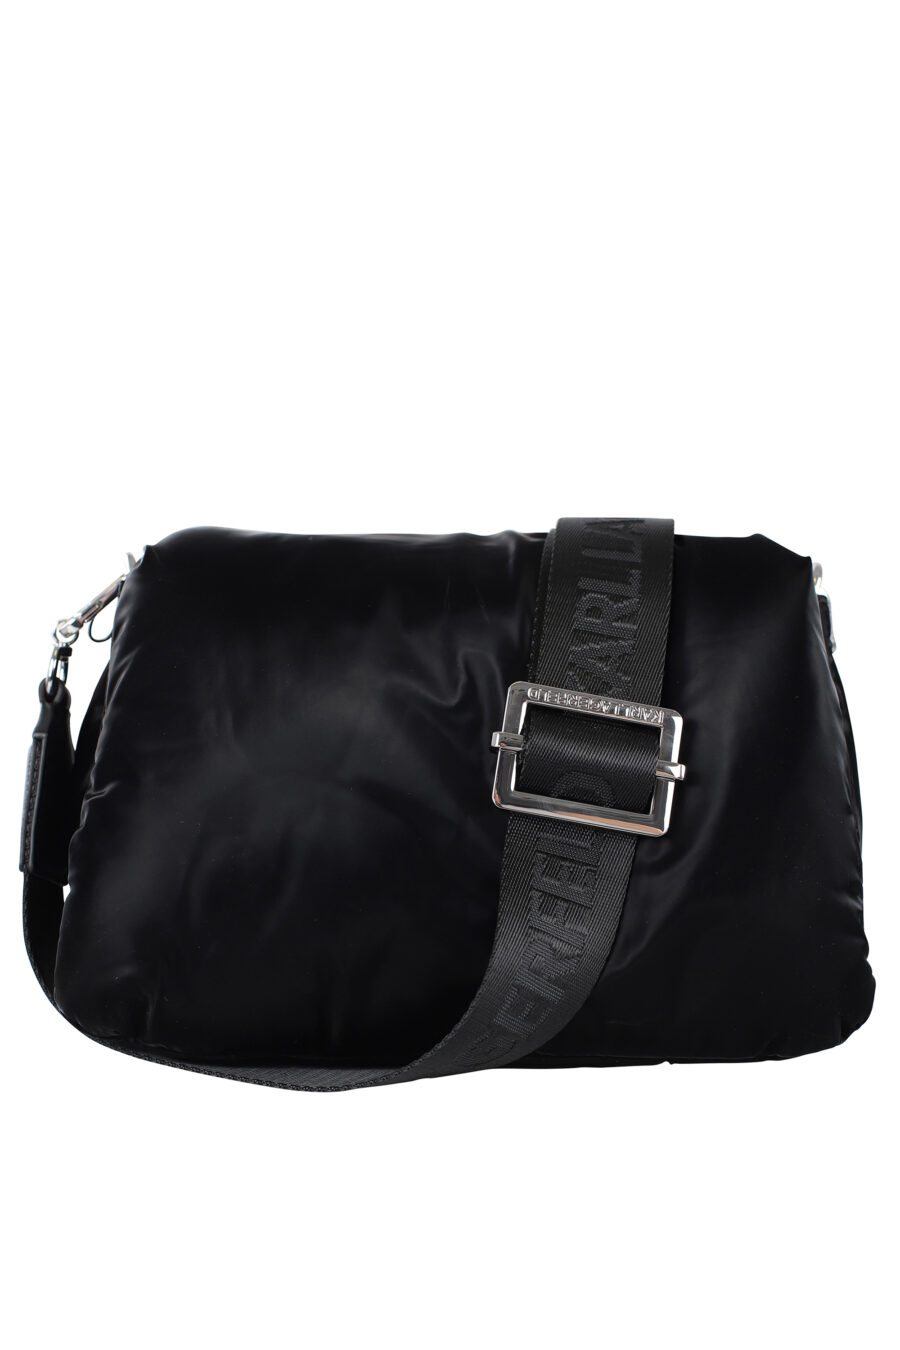 Mini shoulder bag black with autograph logo - IMG 6983